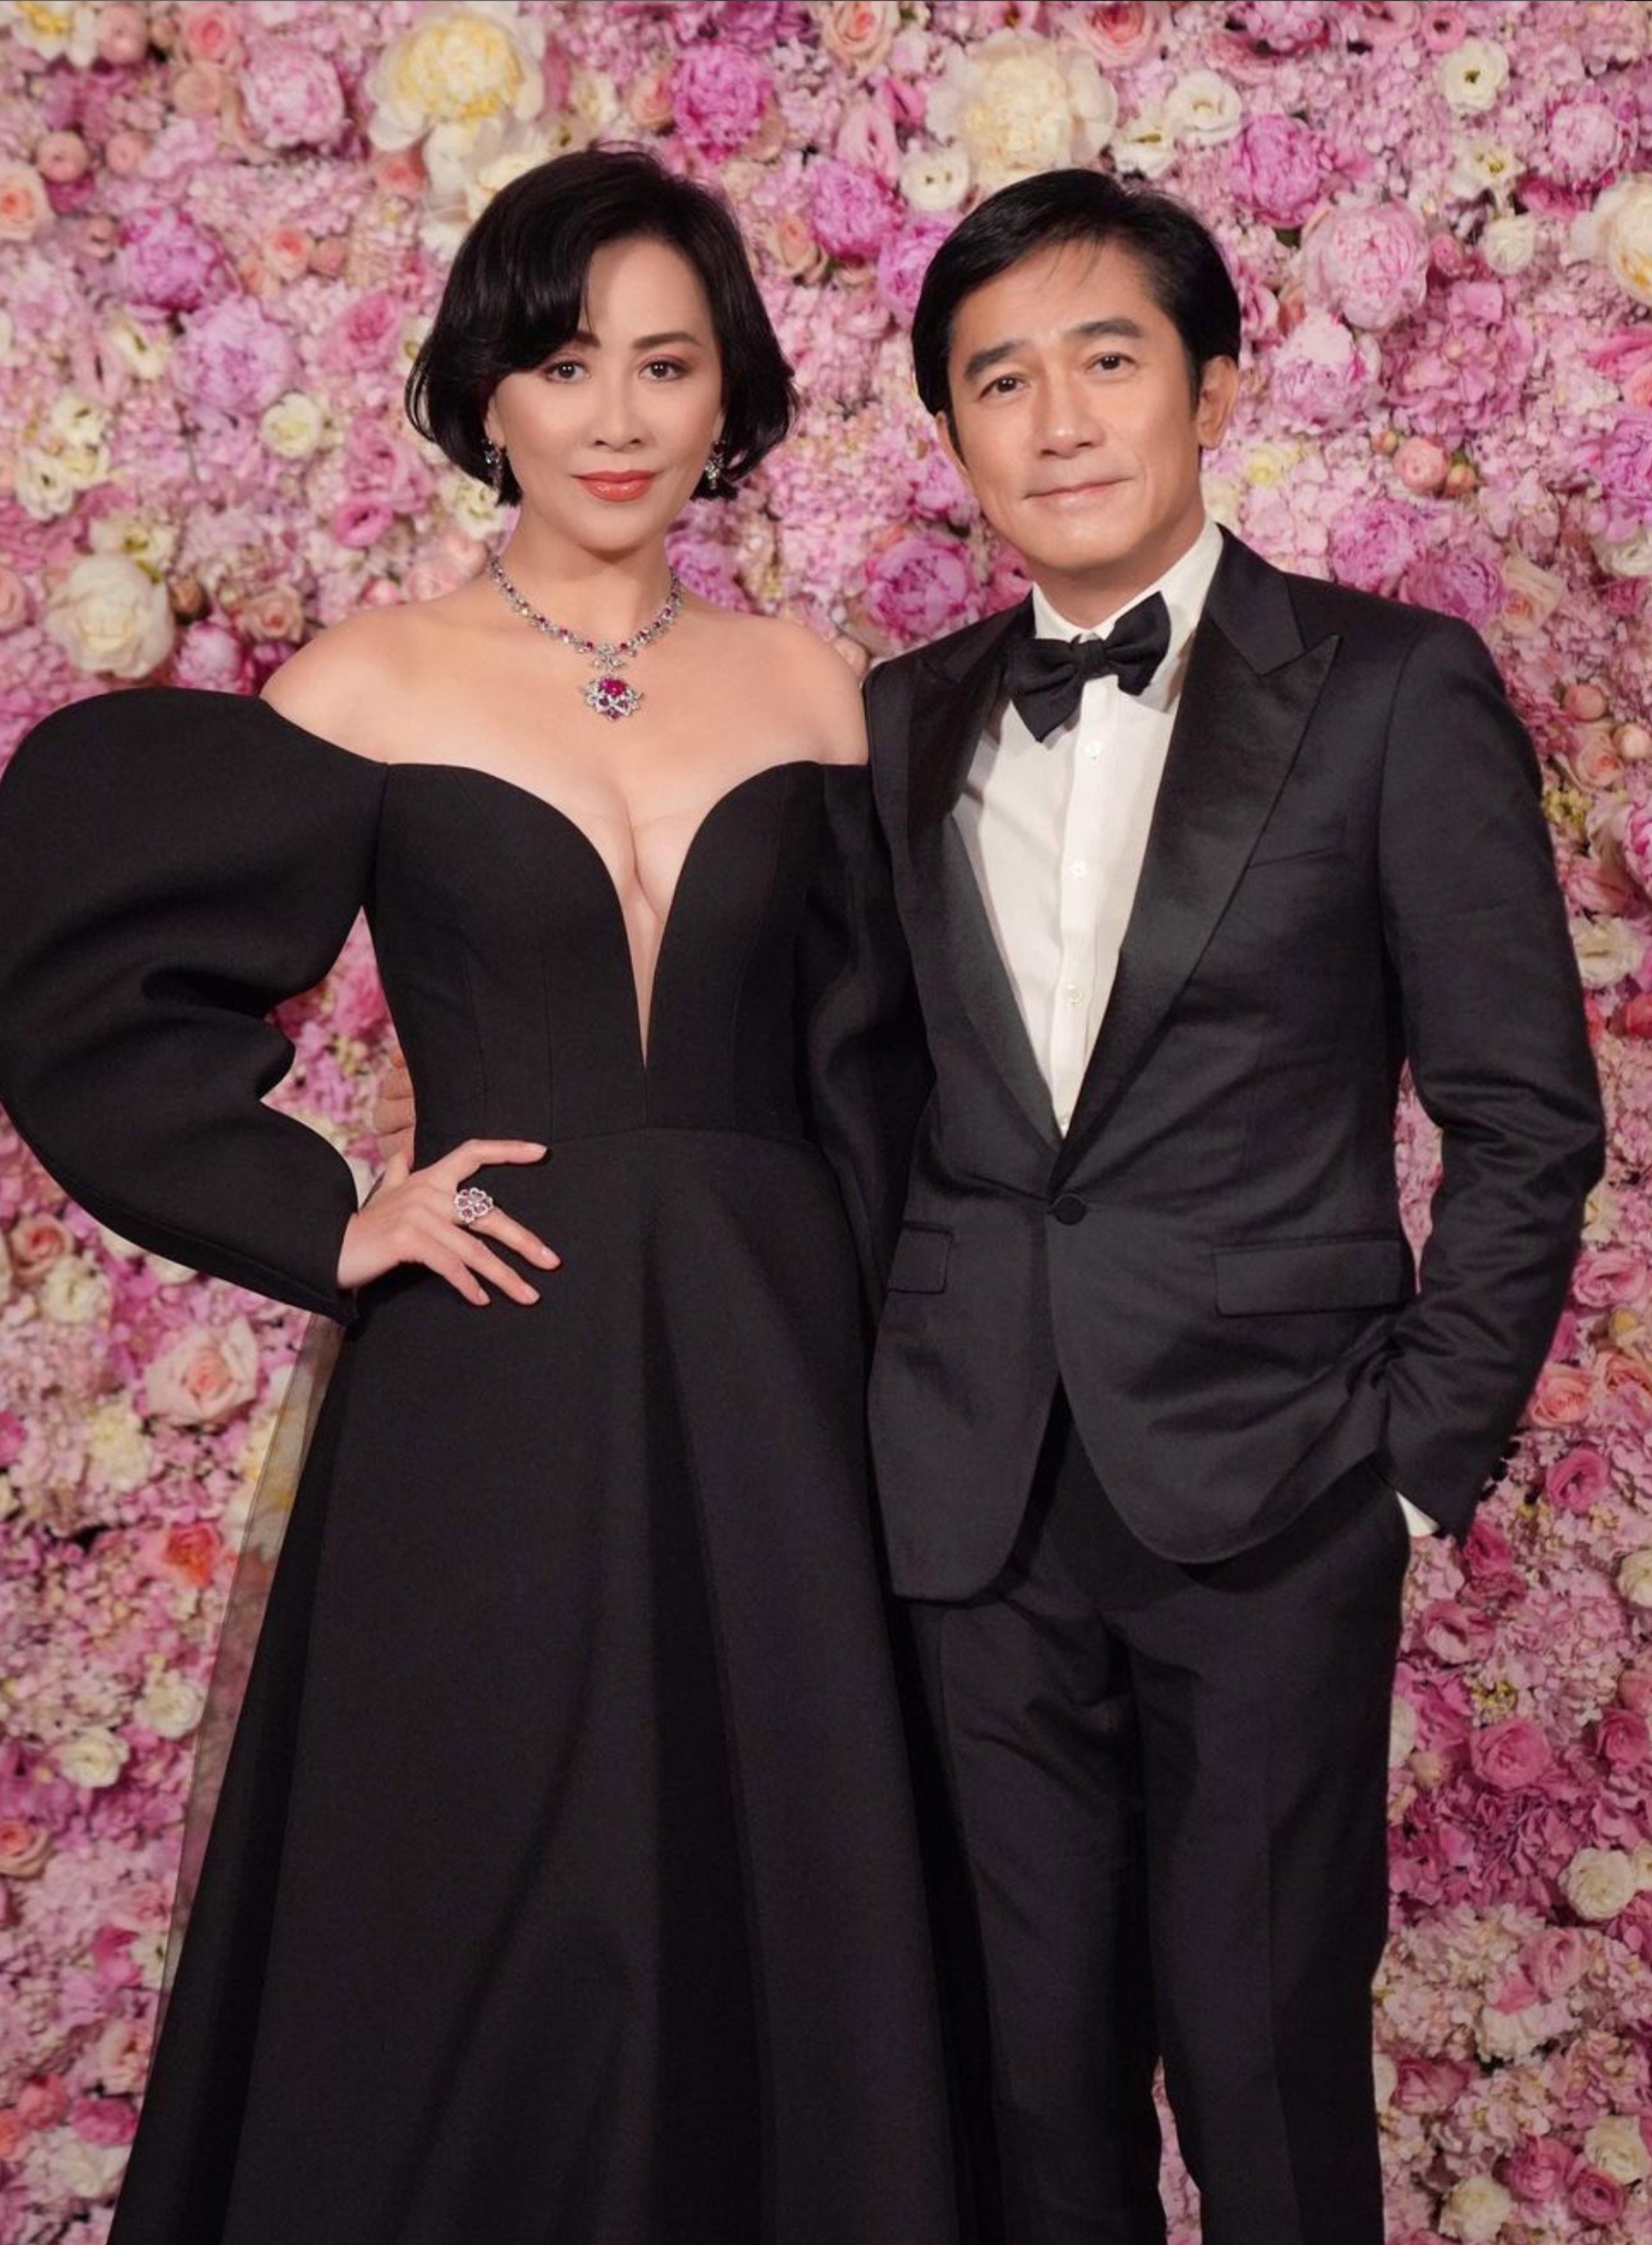 Carina Lau Kar-ling and Tony Leung Chiu-wai are big names in Hong Kong showbiz, and their lifestyle matches their status. Photo: @tonyleung_official/instagram